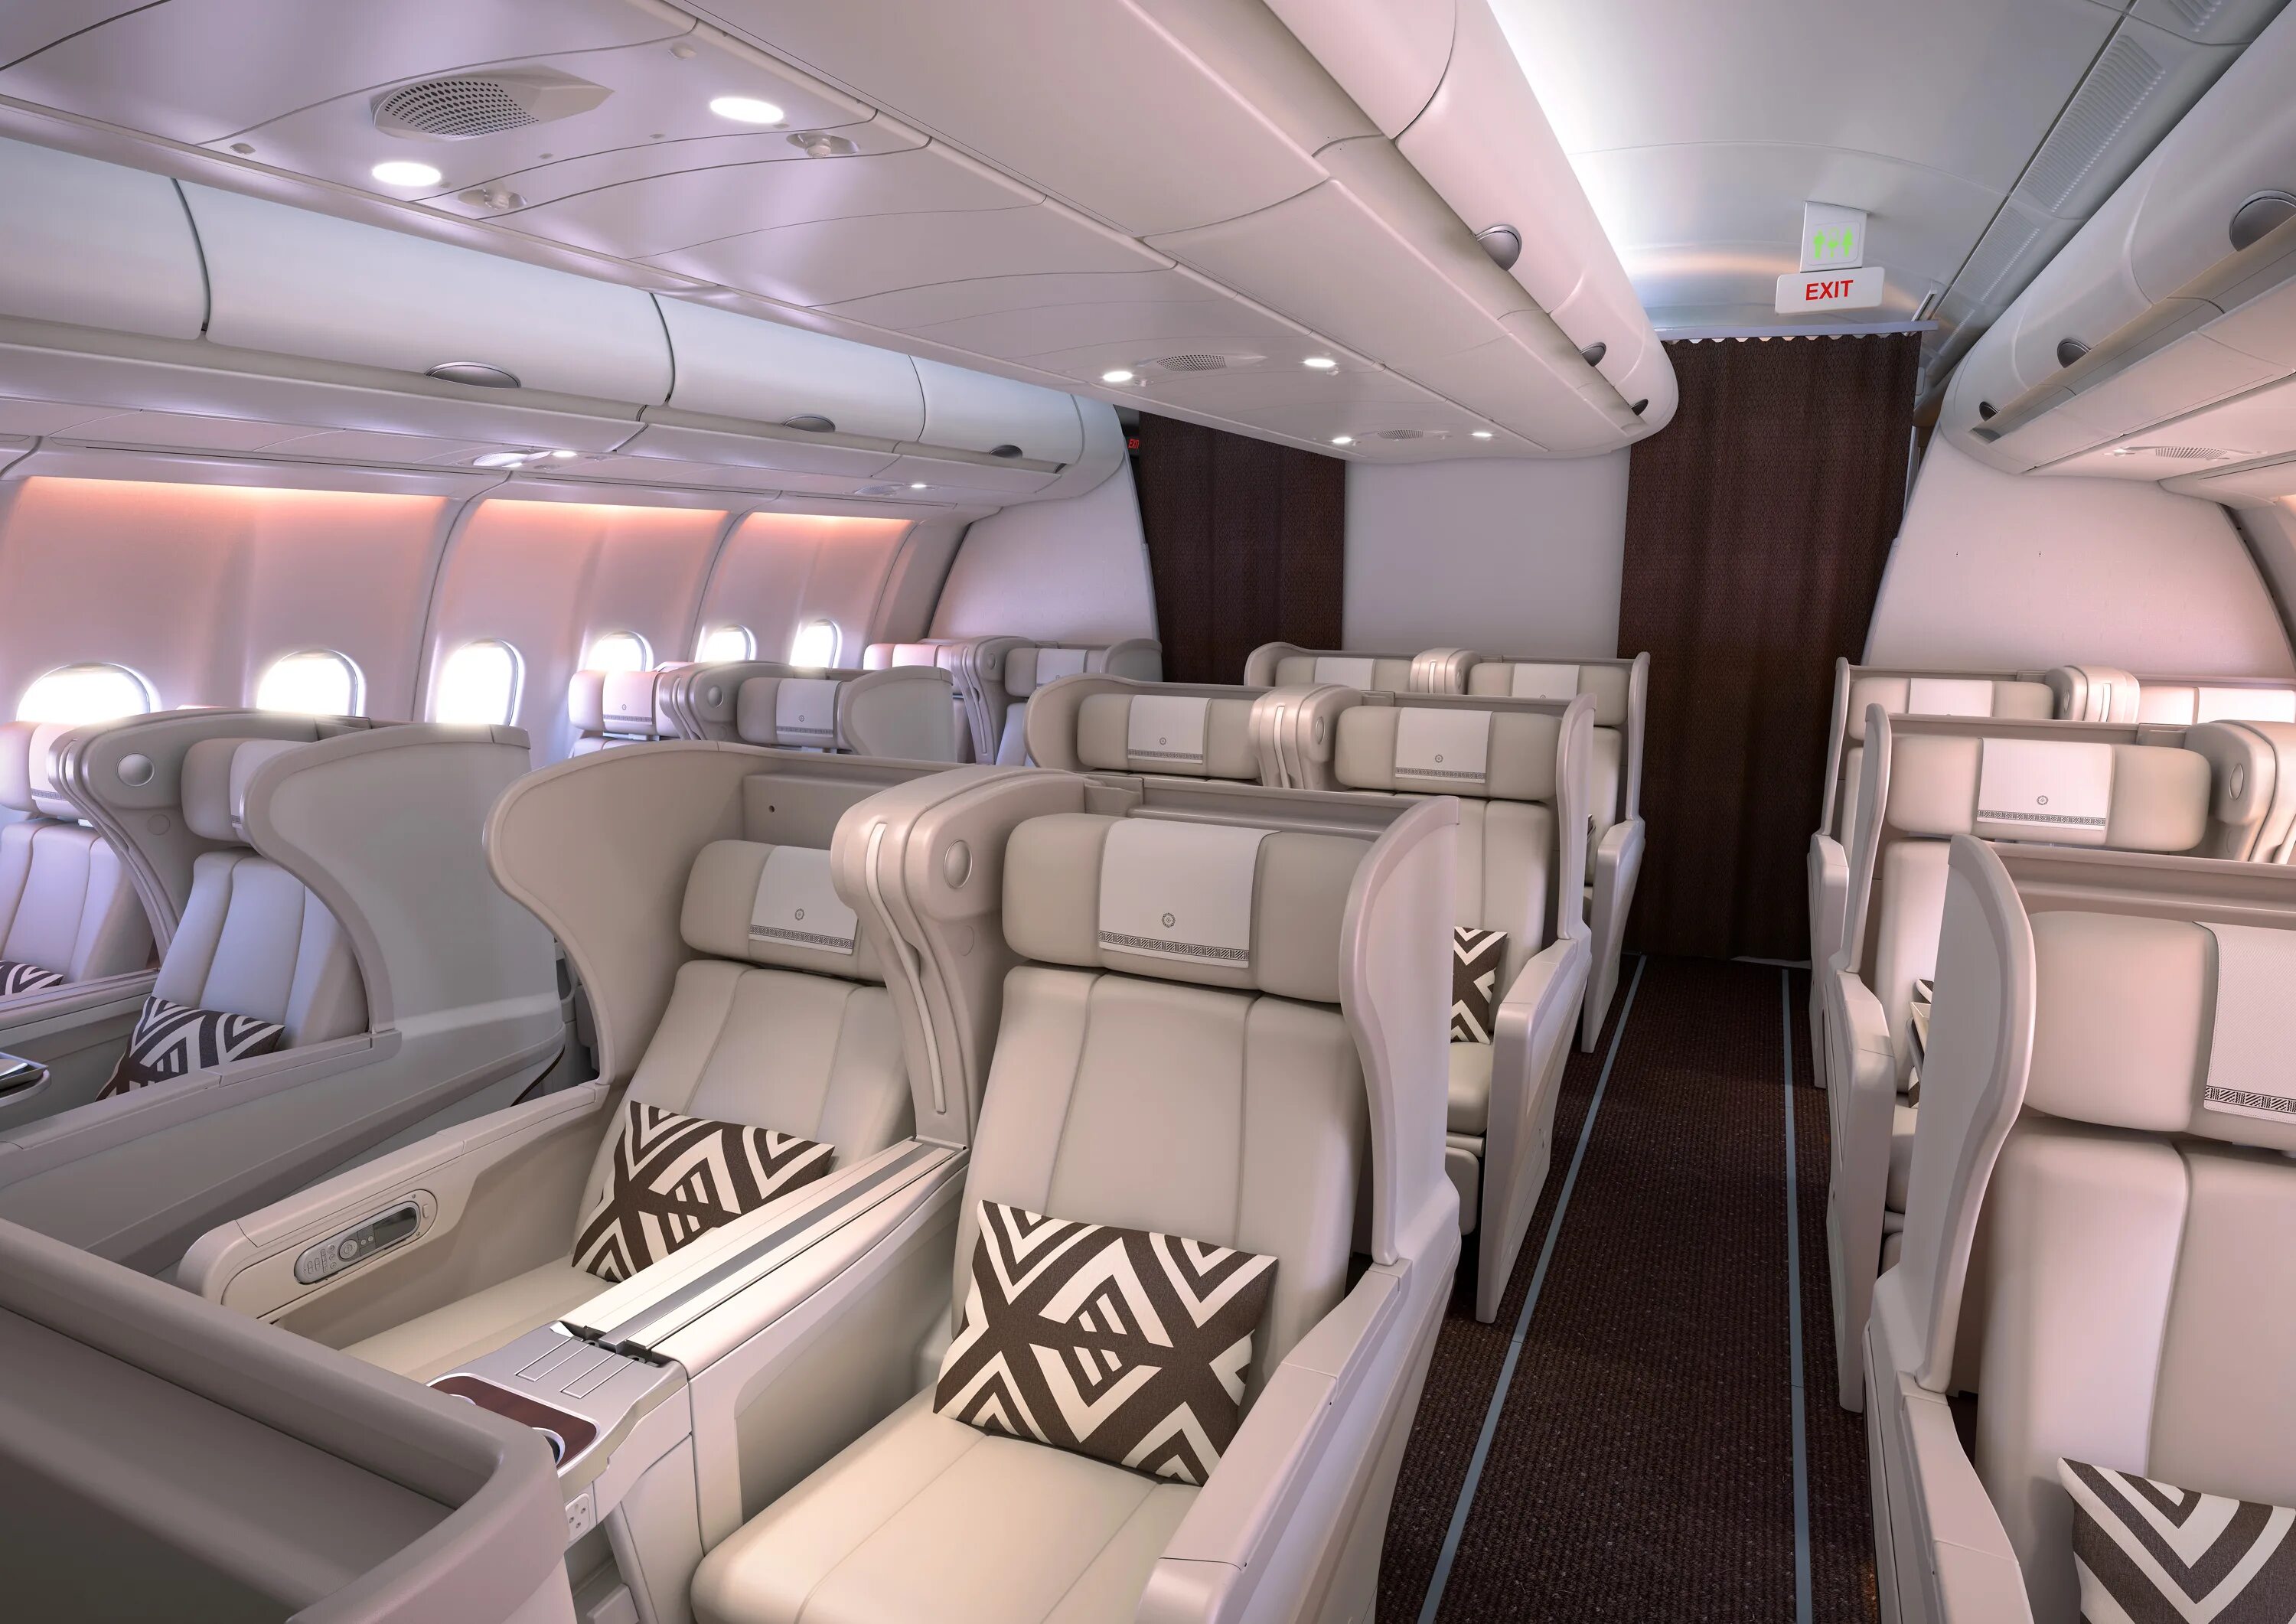 Фиджи Эйрвейз. Air Algerie бизнес класс 737. Fiji Airways Business class. Салон самолета бизнес класса.